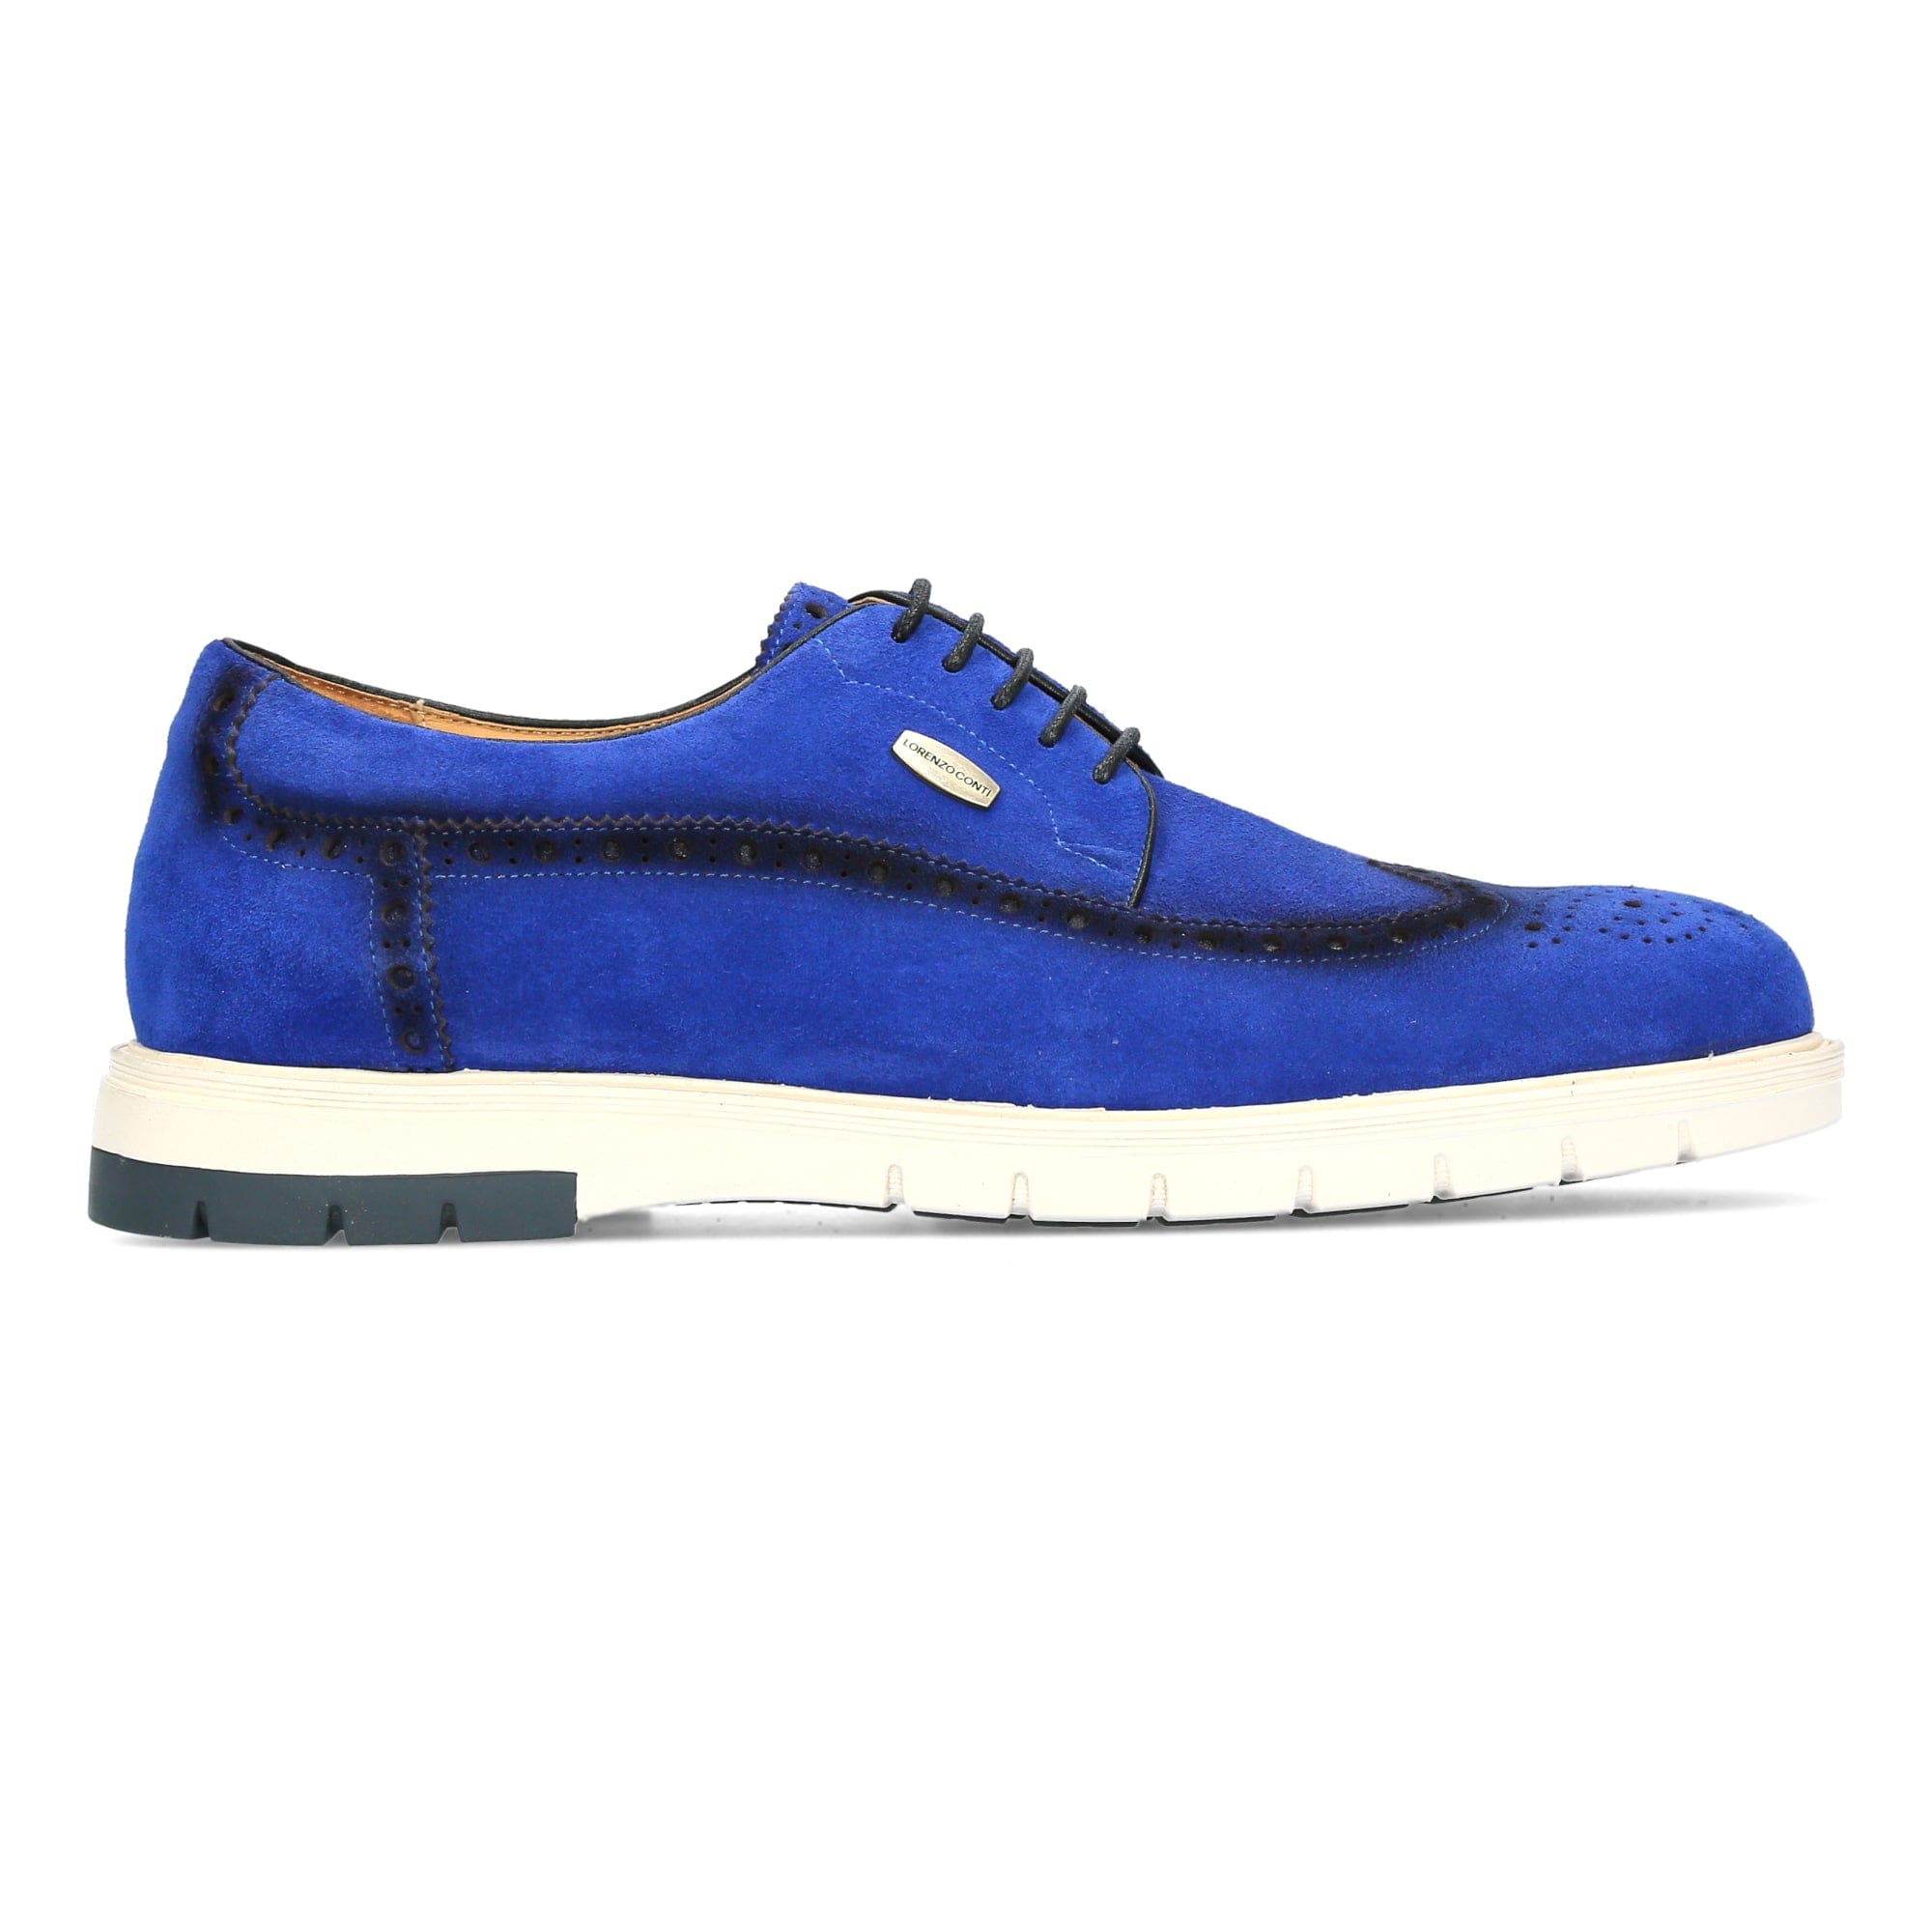 Chaussure Homme ARNO 01 - 40 / Bleu - Soulier